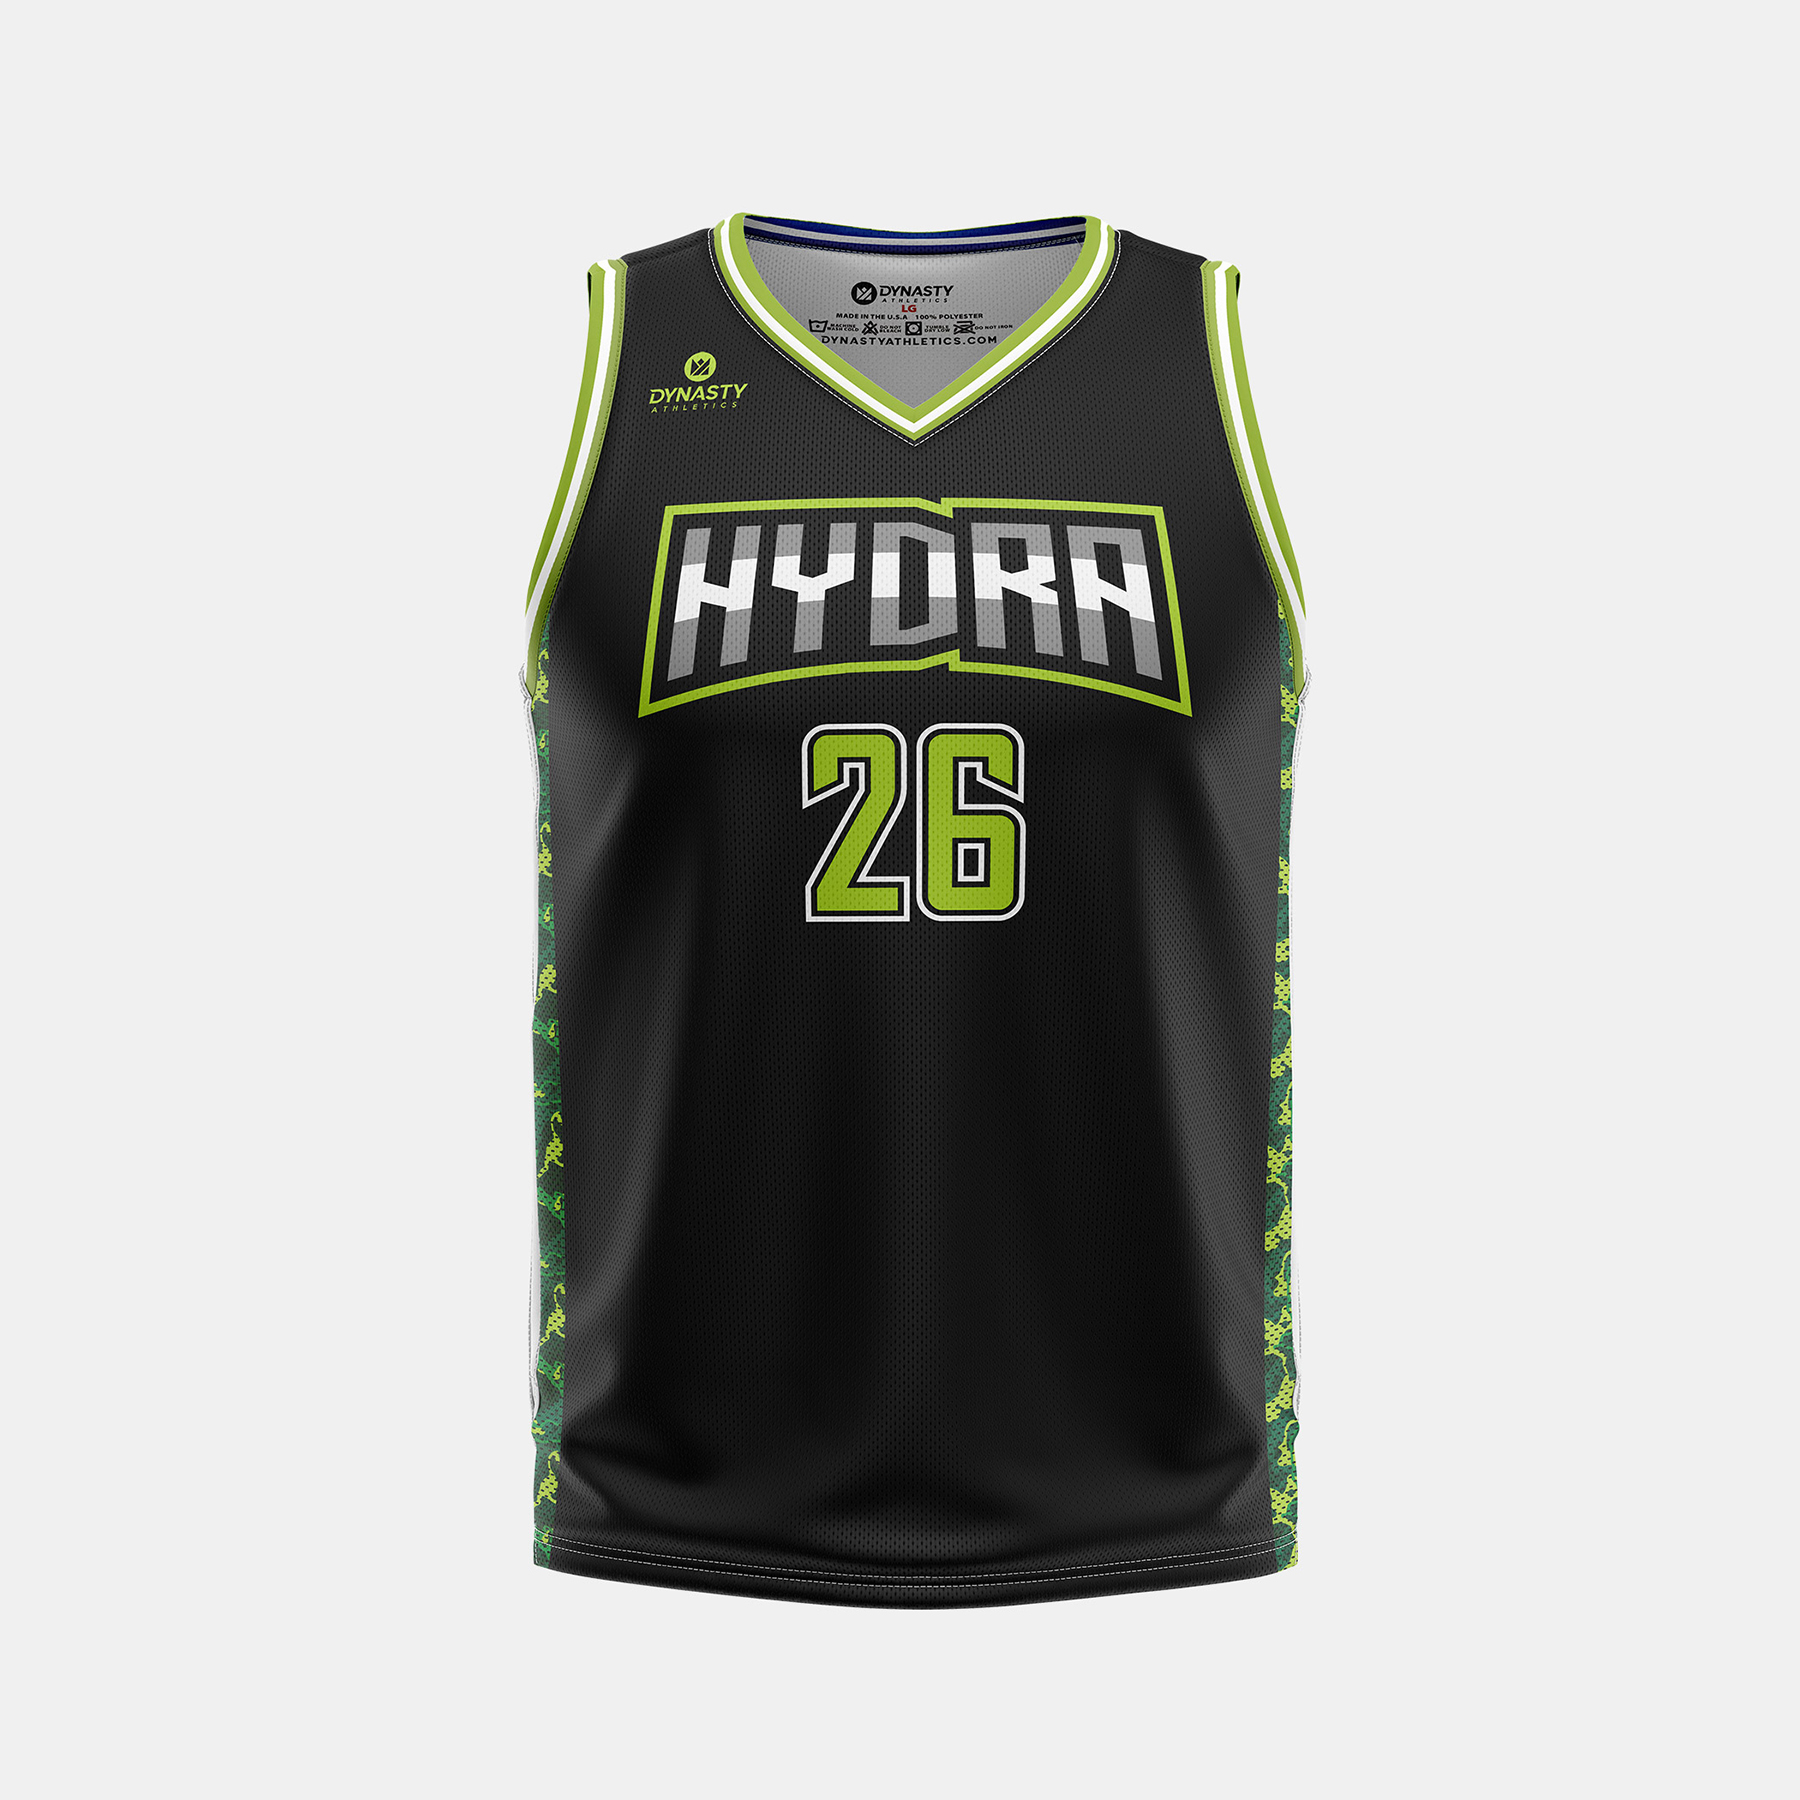 Dynasty Athletics Hydra VNeck Basketball Jersey Home Front